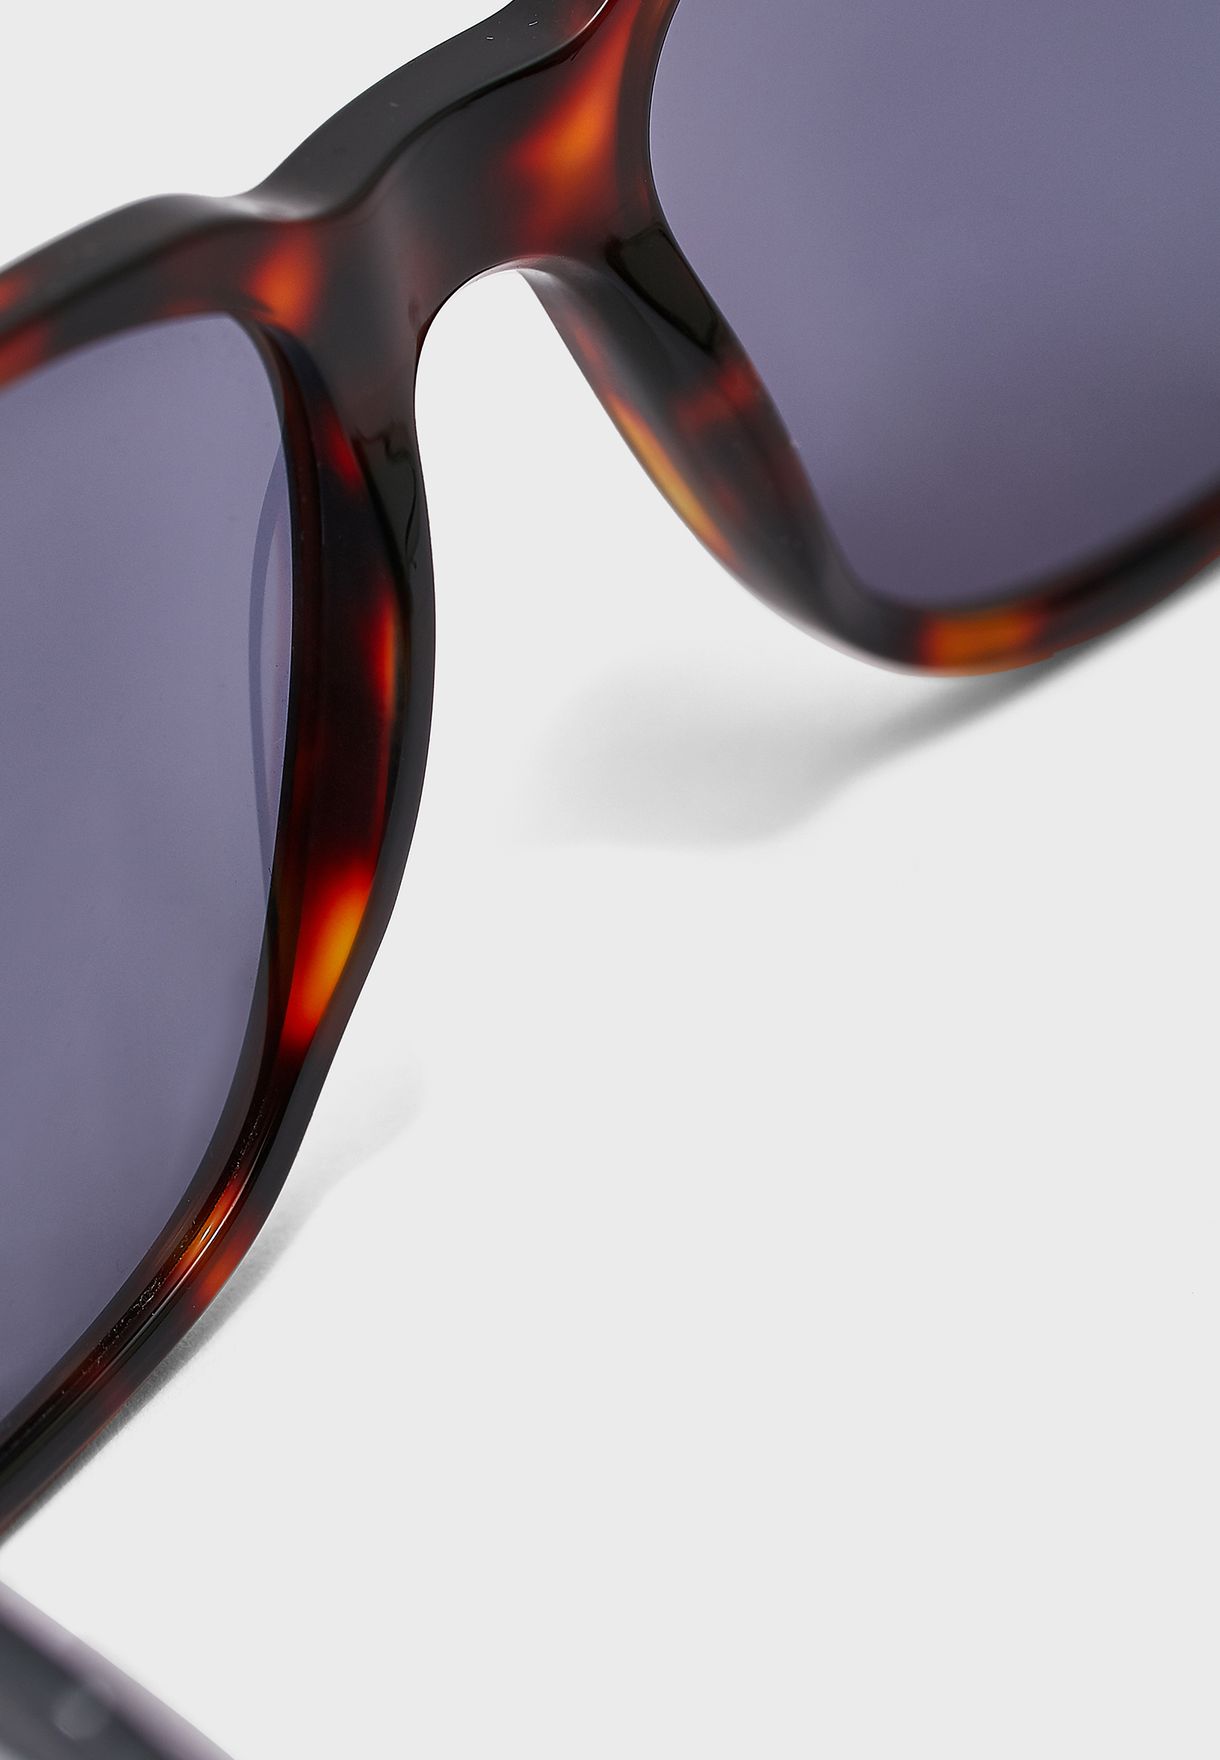 L910S Wayfarer Sunglasses